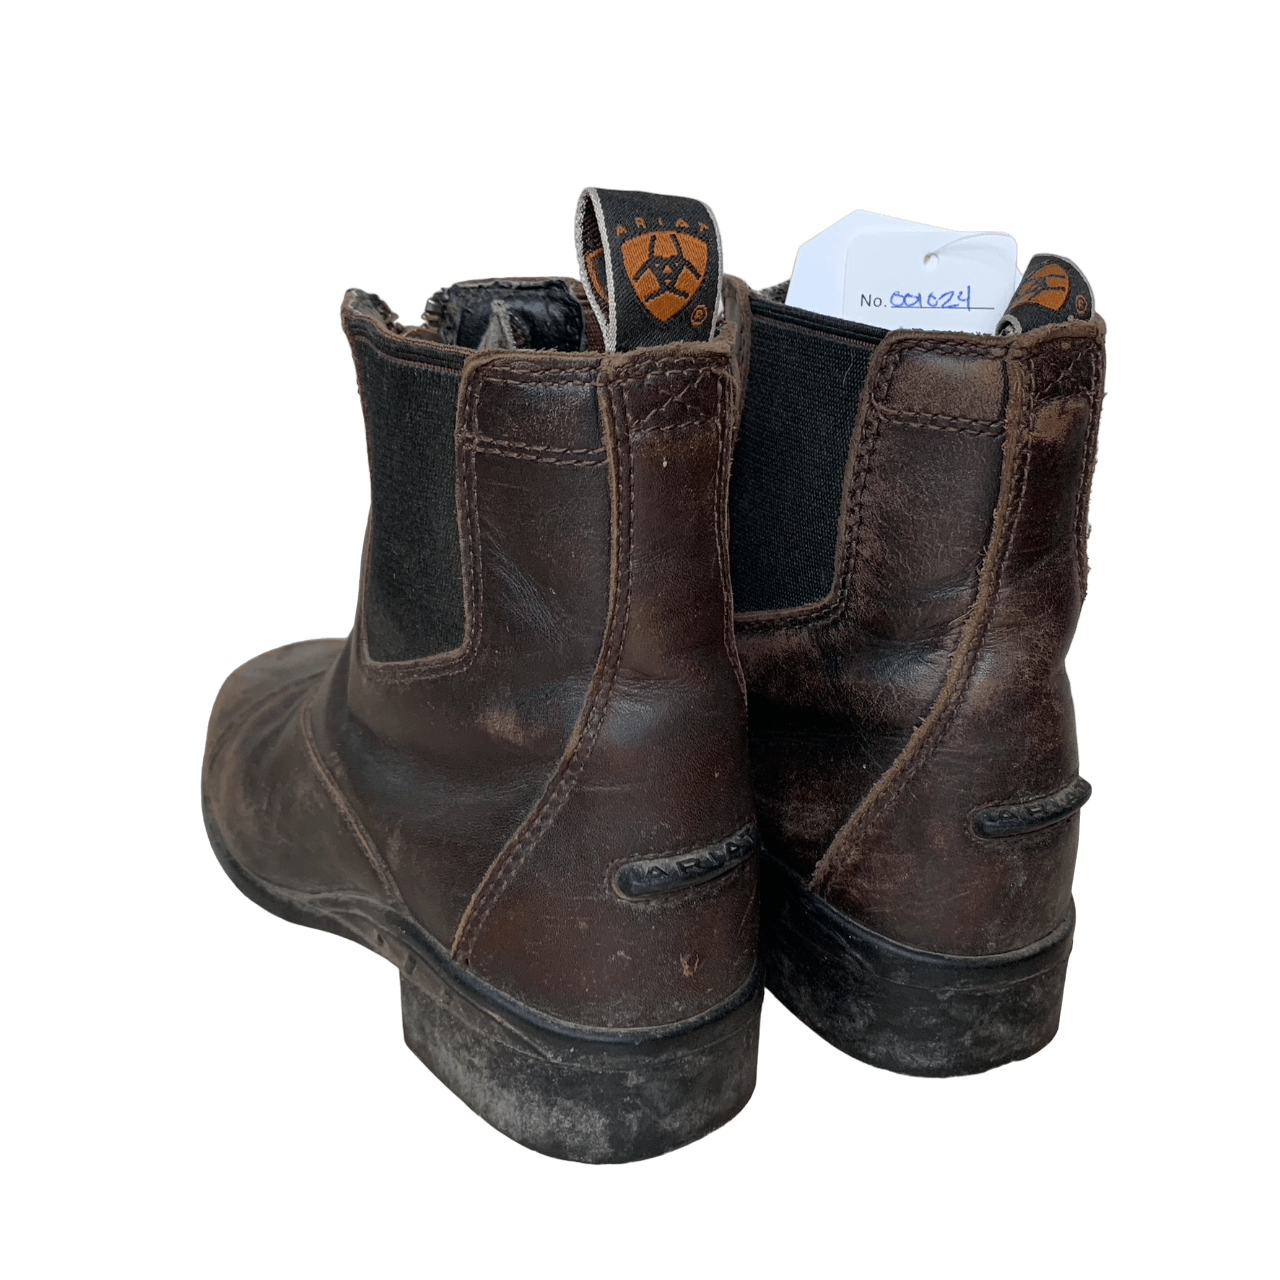 Ariat 'Devon' Front Zip Paddock Boots in Chocolate - Toddler 13